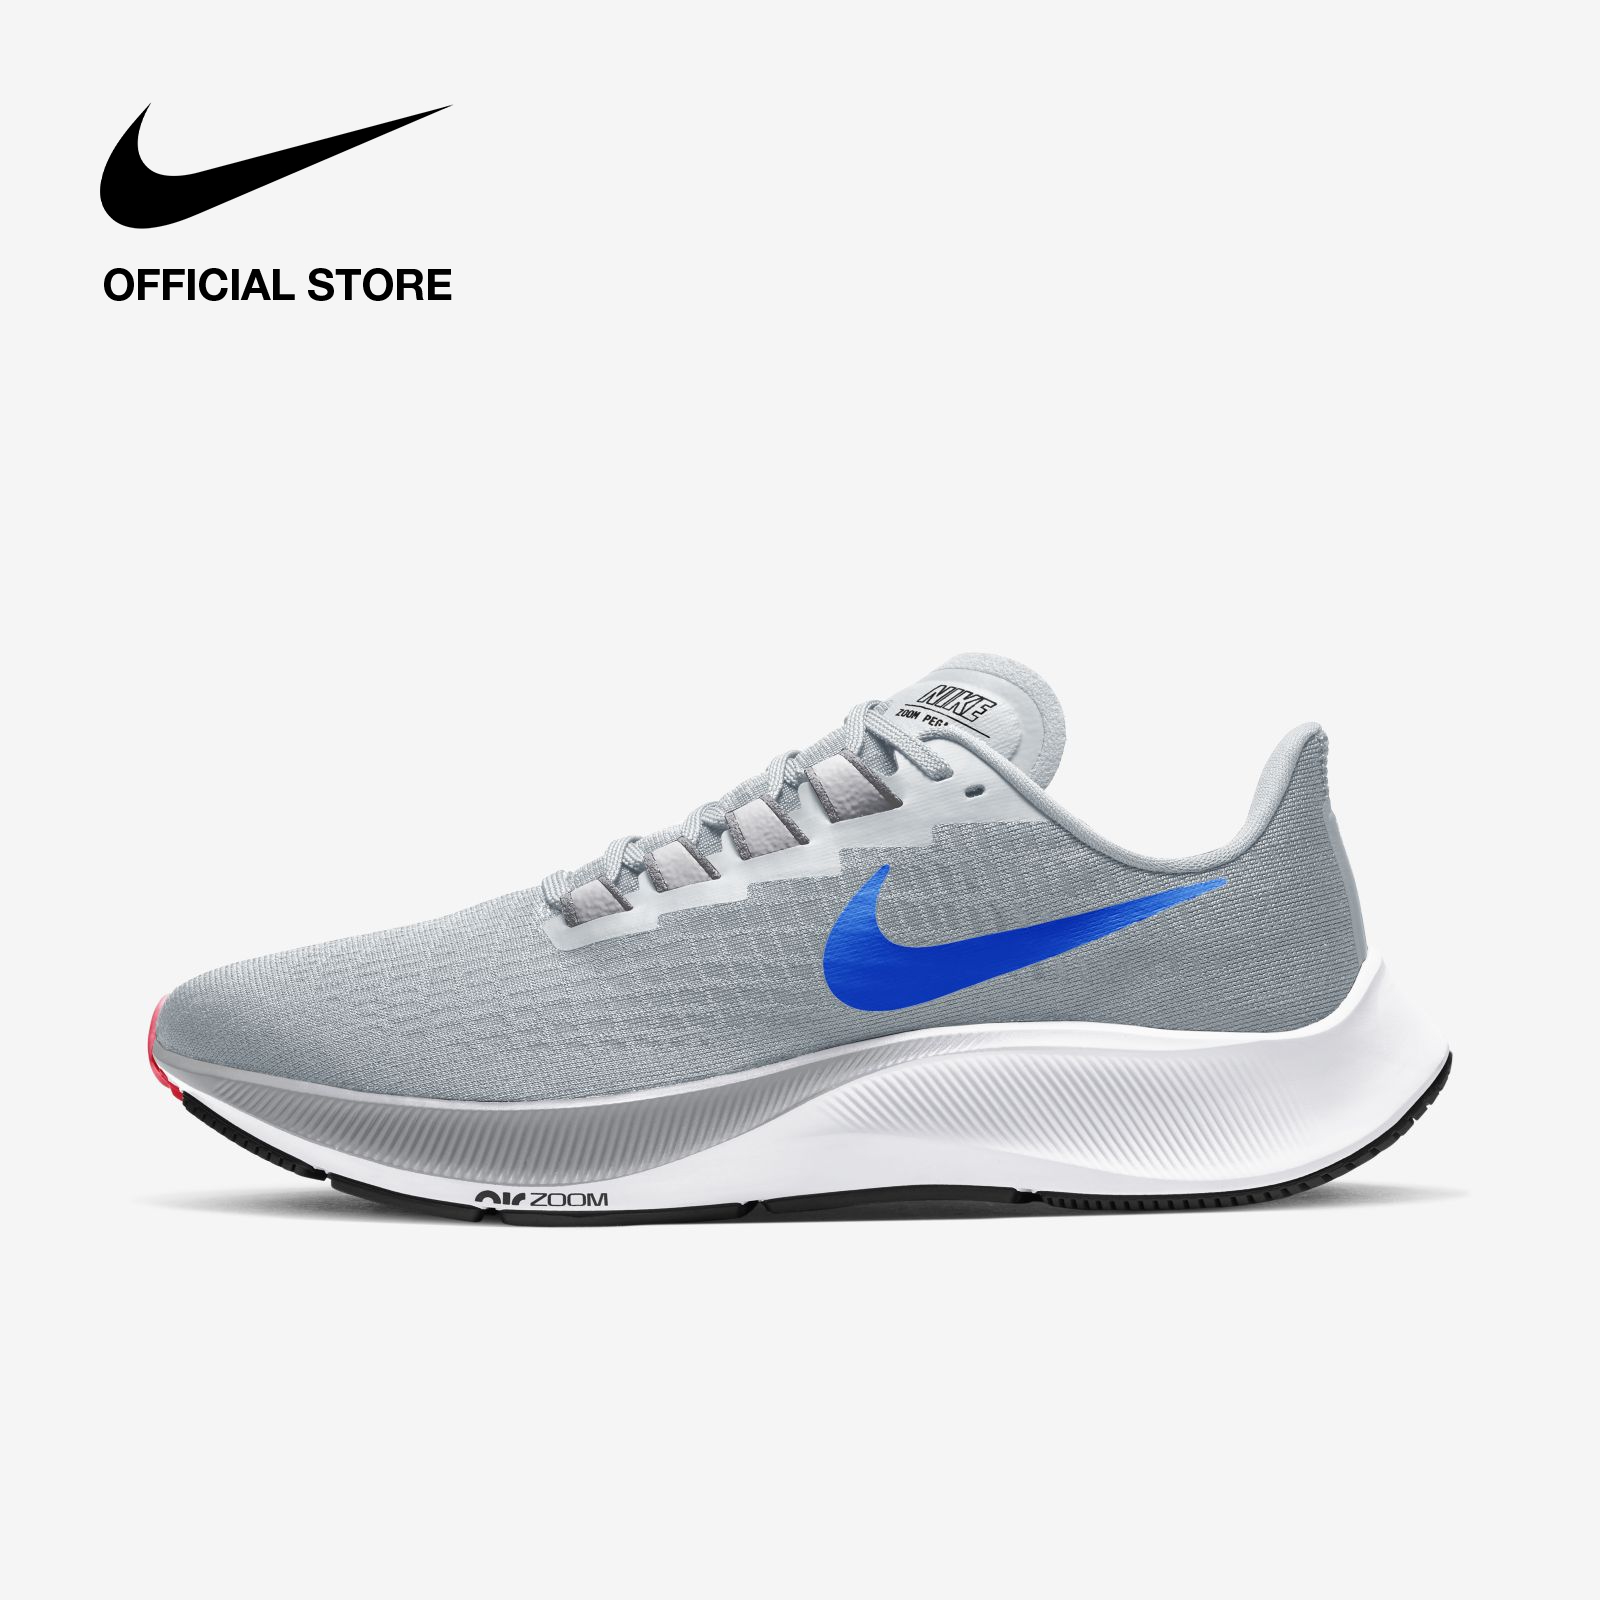 Nike Men's Air Zoom Pegasus Shoes - Grey ไนกี้ รองเท้าผู้ชาย แอร์ ซูม เปกาซัส - สีเทา